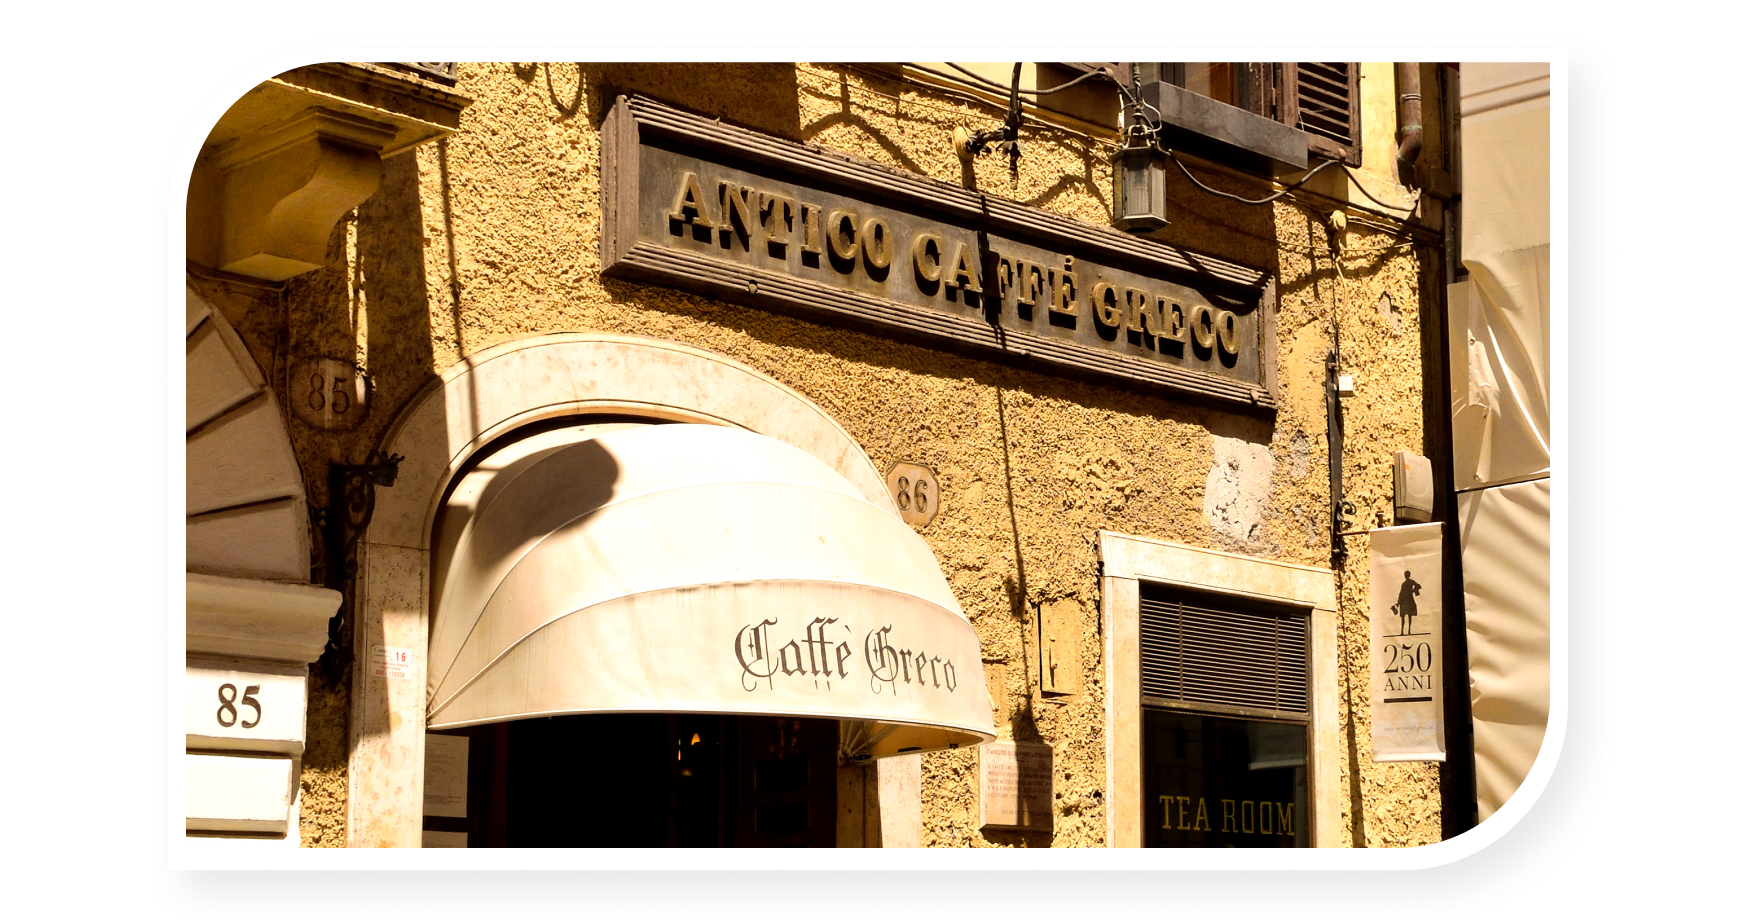 Entrance of Antico Caffé Greco